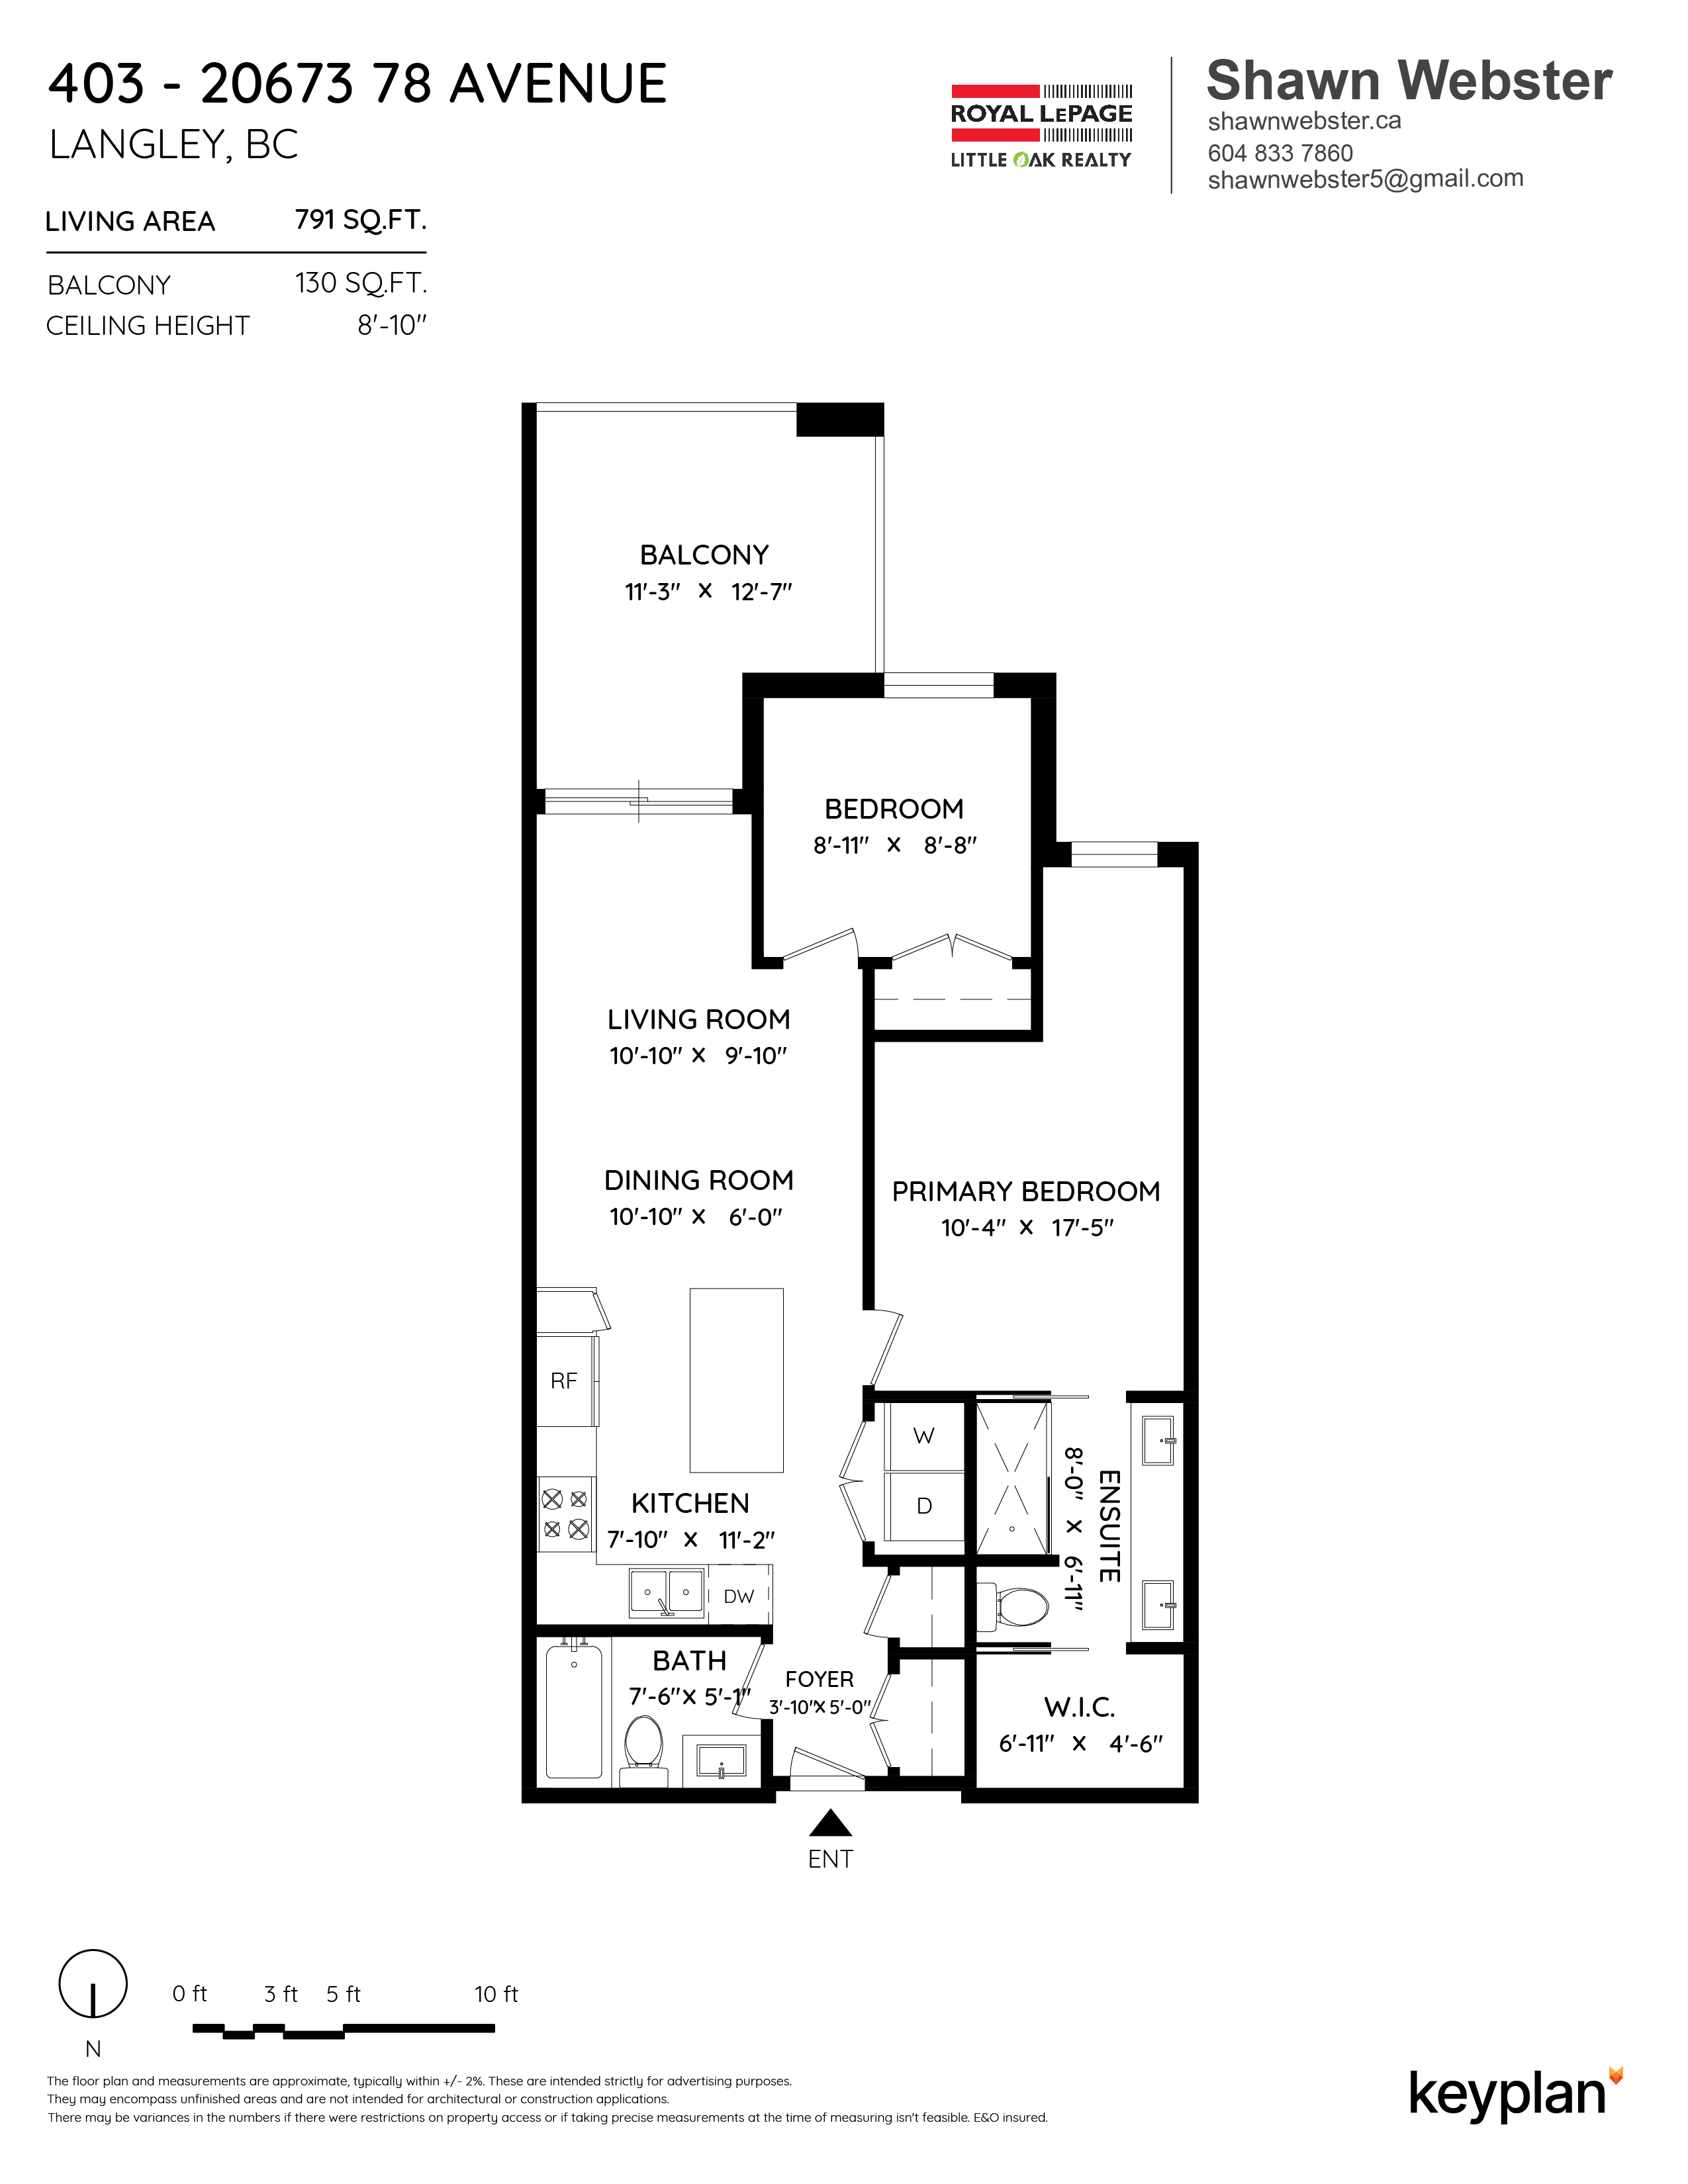 Shawn Webster - Unit 403 - 20673 78 Avenue, Langley, BC, Canada | Floor Plan 1